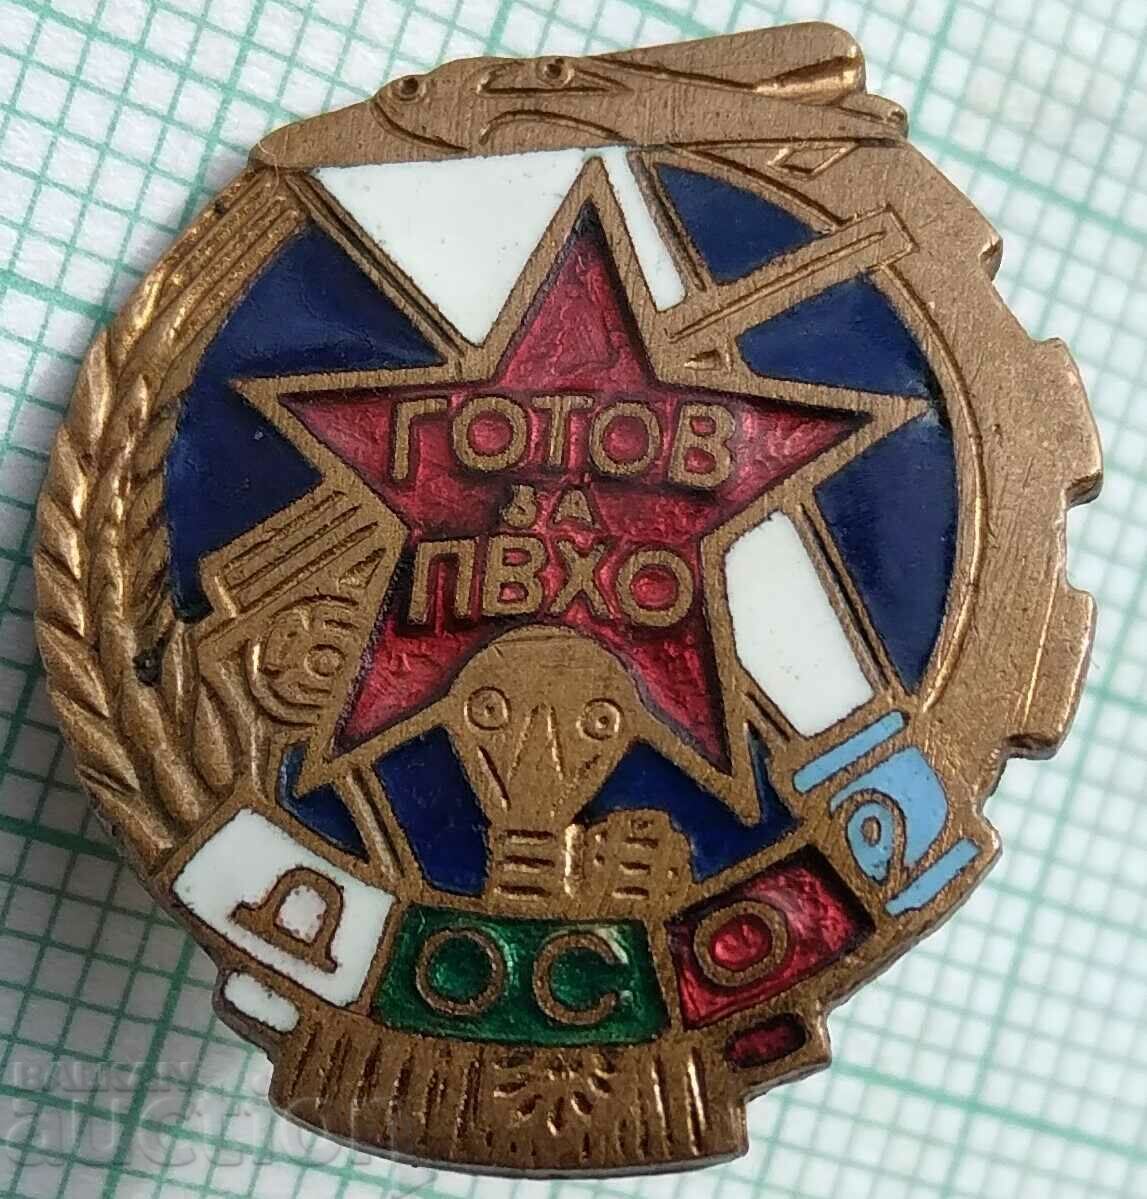 15828 Badge - DOSO Ready for PVCO - bronze enamel screw